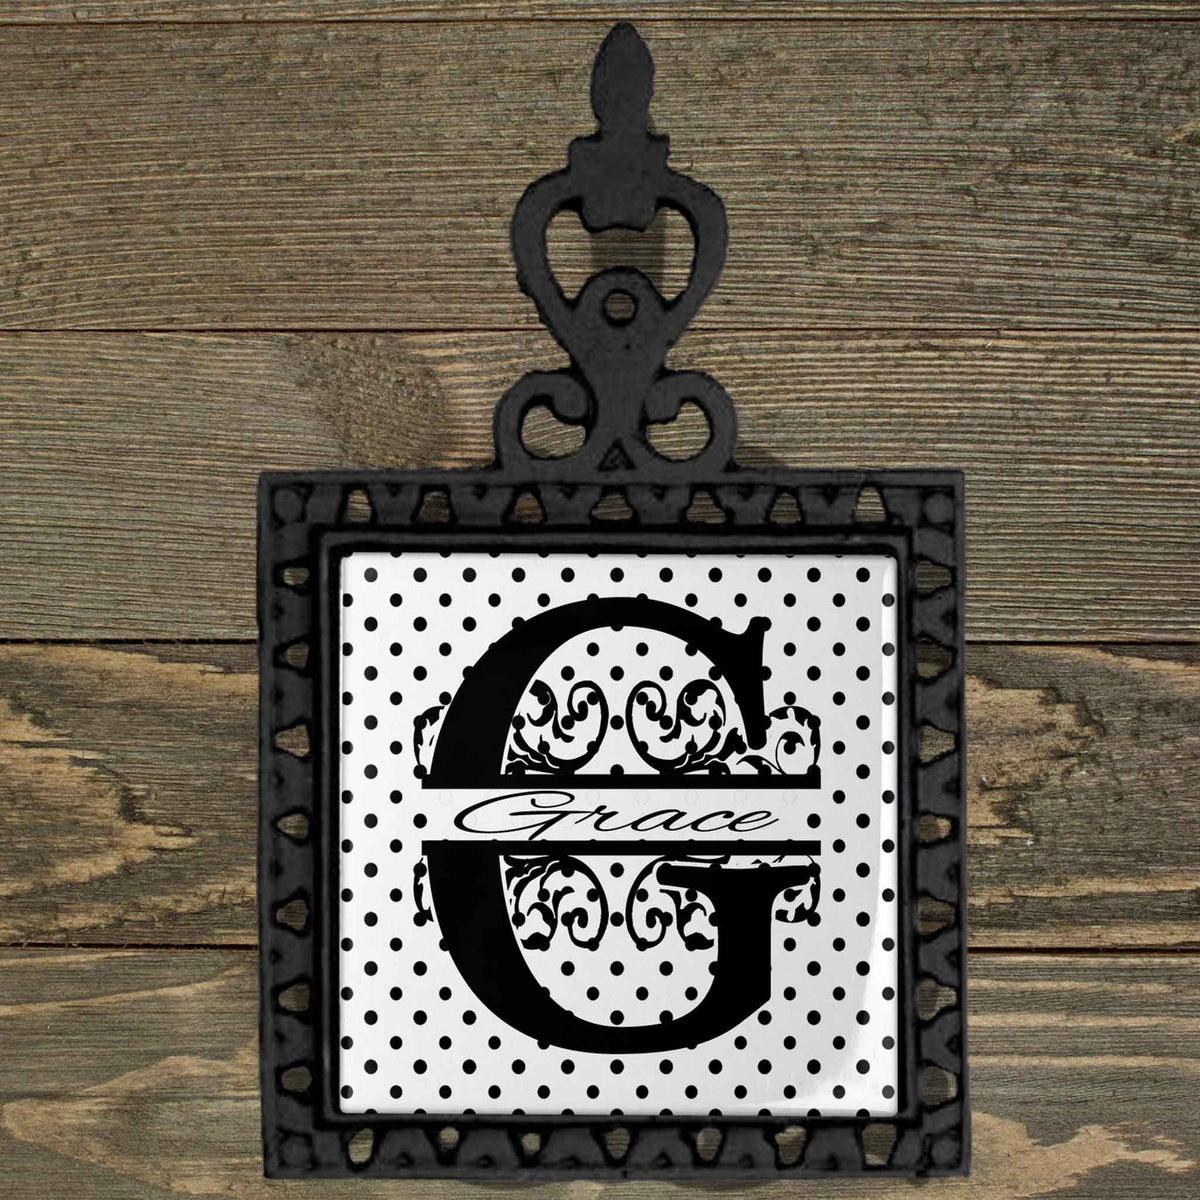 Personalized Iron Trivet | Custom Kitchen Gifts | Black and White Polka Dot